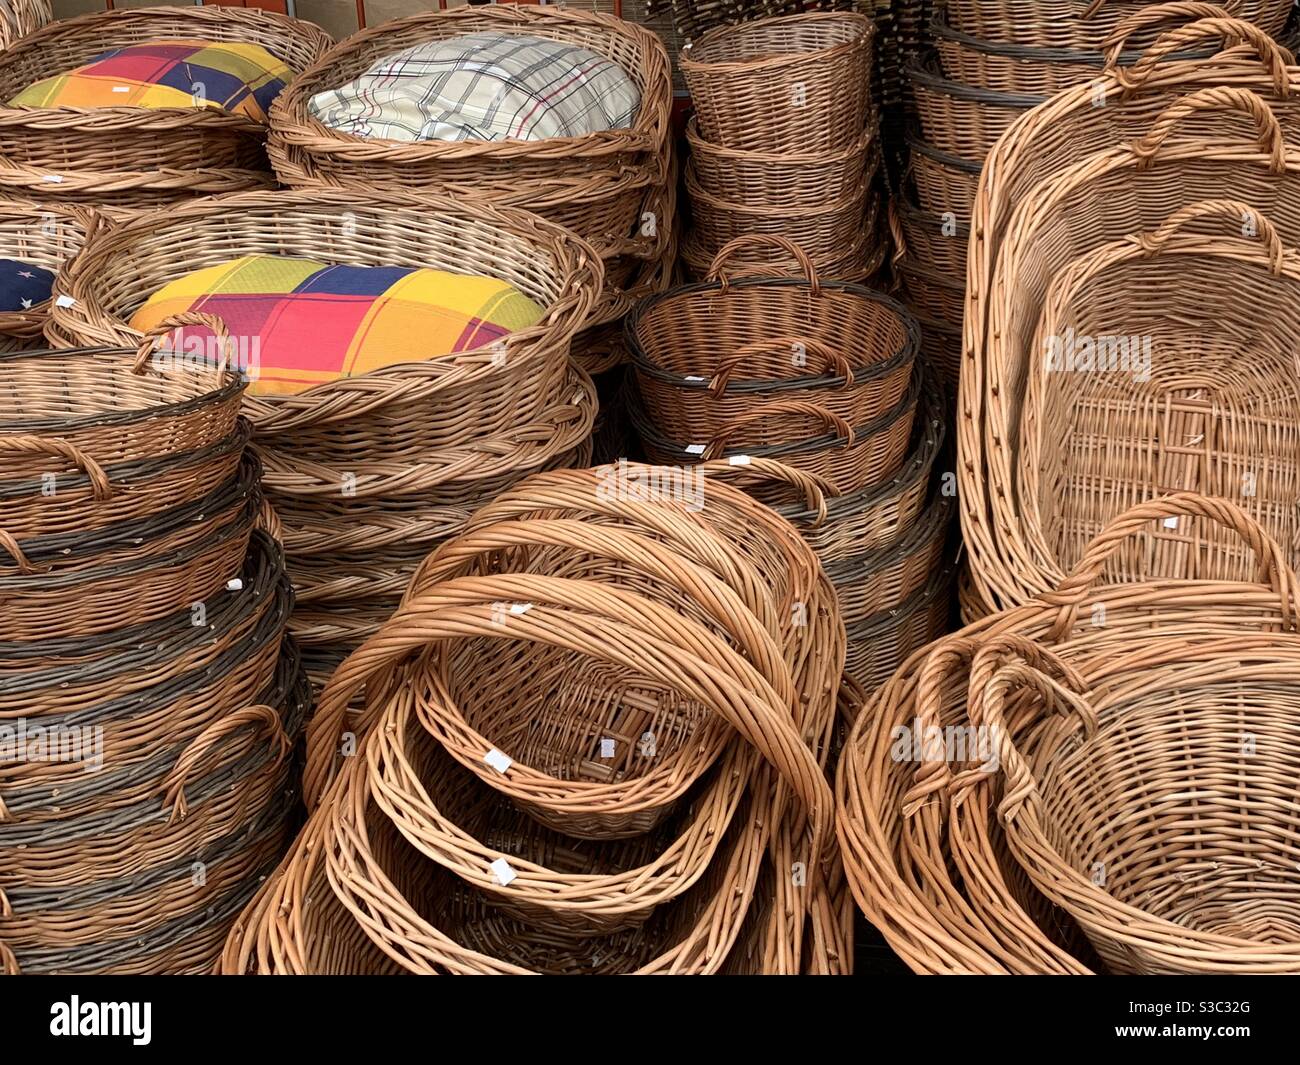 Handmade Small Brown Woven Wicker Cane Bamboo Basket Flowers Fruits Sri Lanka 